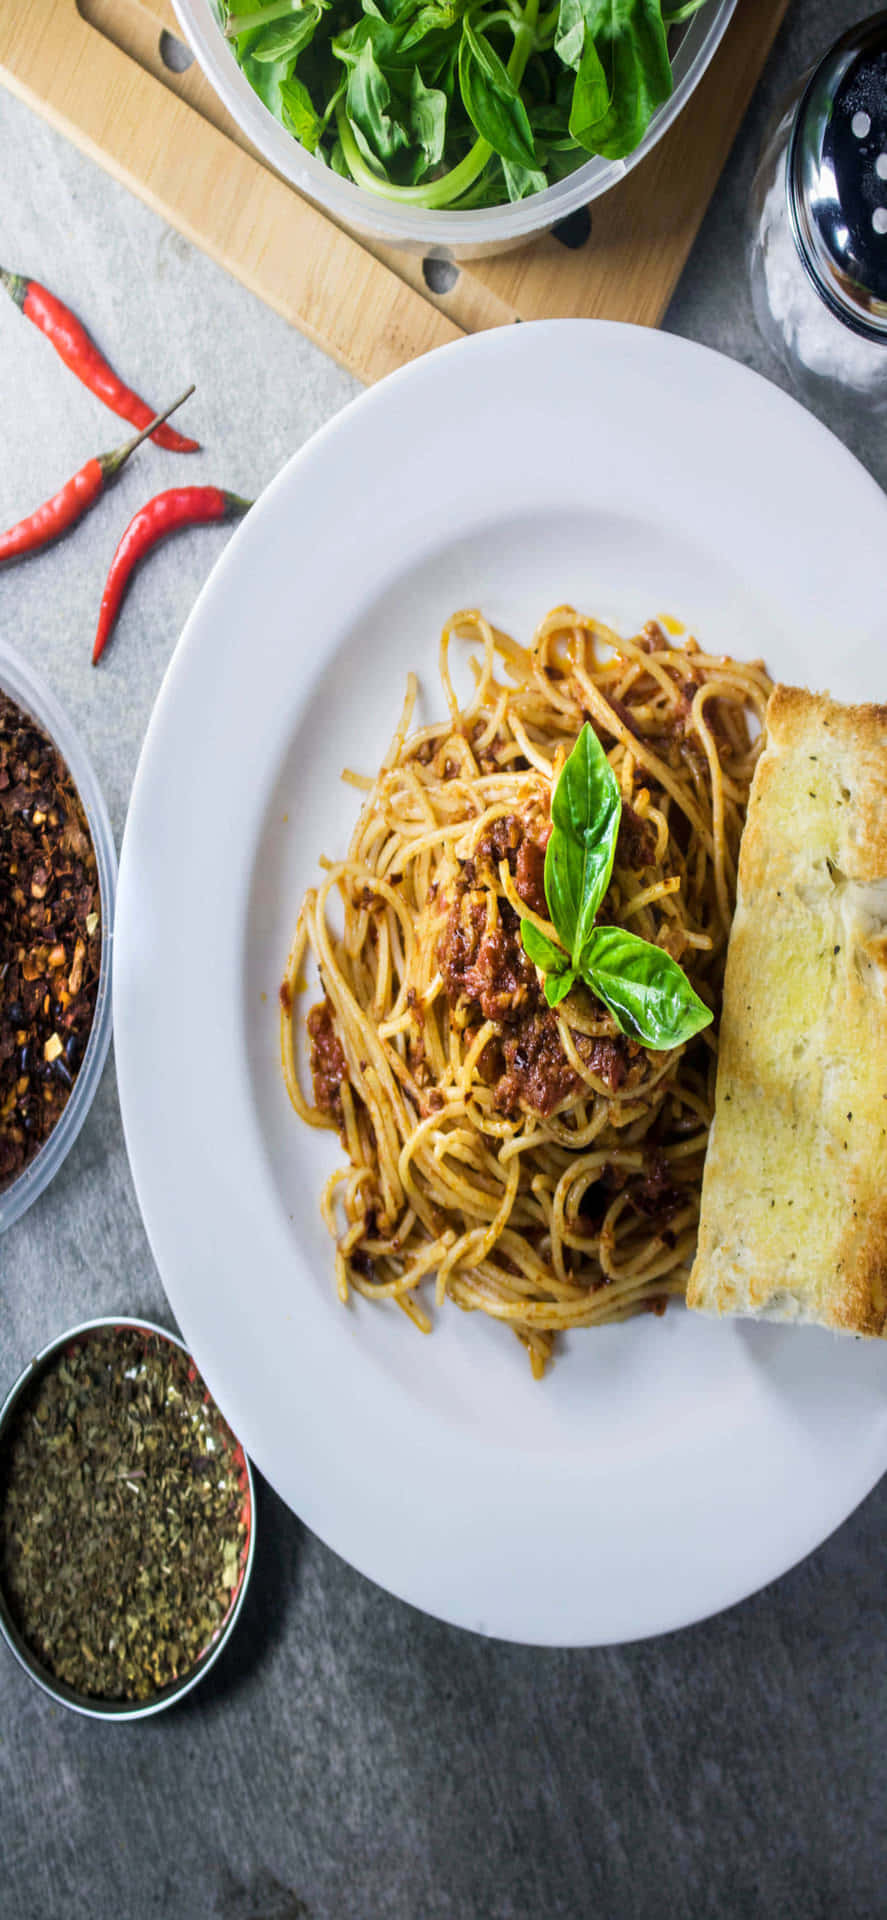 Spaghetti With Garlic Bread iPhone X Pasta Background